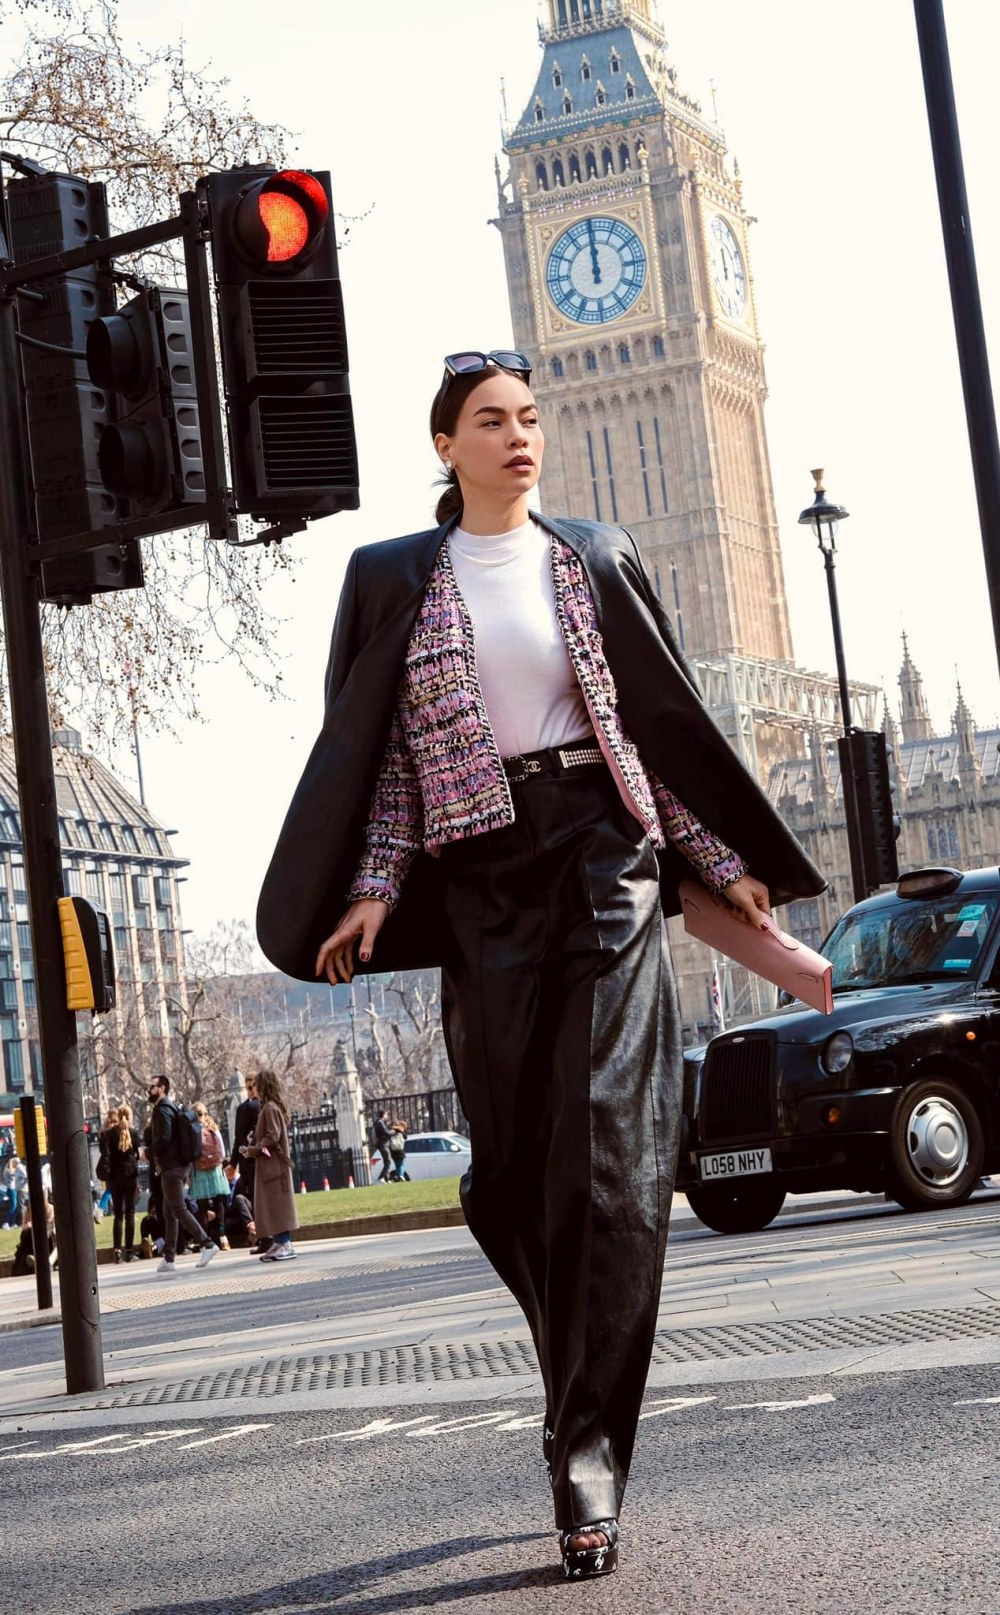 BZ-street-style-cua-ho-ngoc-ha-tai-london-feature-chanel-jacket-multicolor